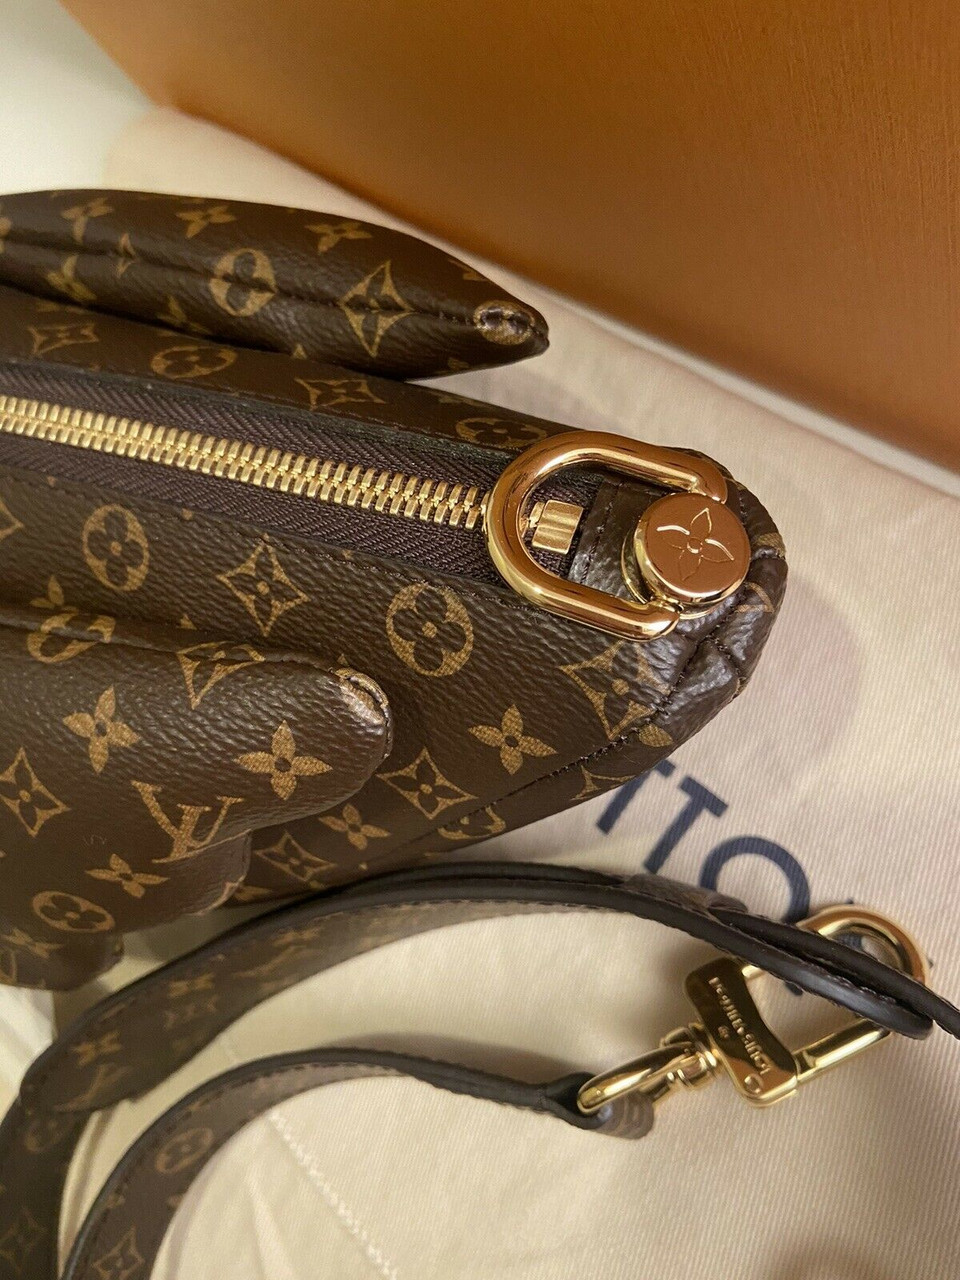 Ovrnundr on Instagram: Louis Vuitton x NIGO (2) Duck Bag official images.  Release November 2021, retail $4,450 dollars 🦆 Photo: @dlouisv.co / @ louisvuitton